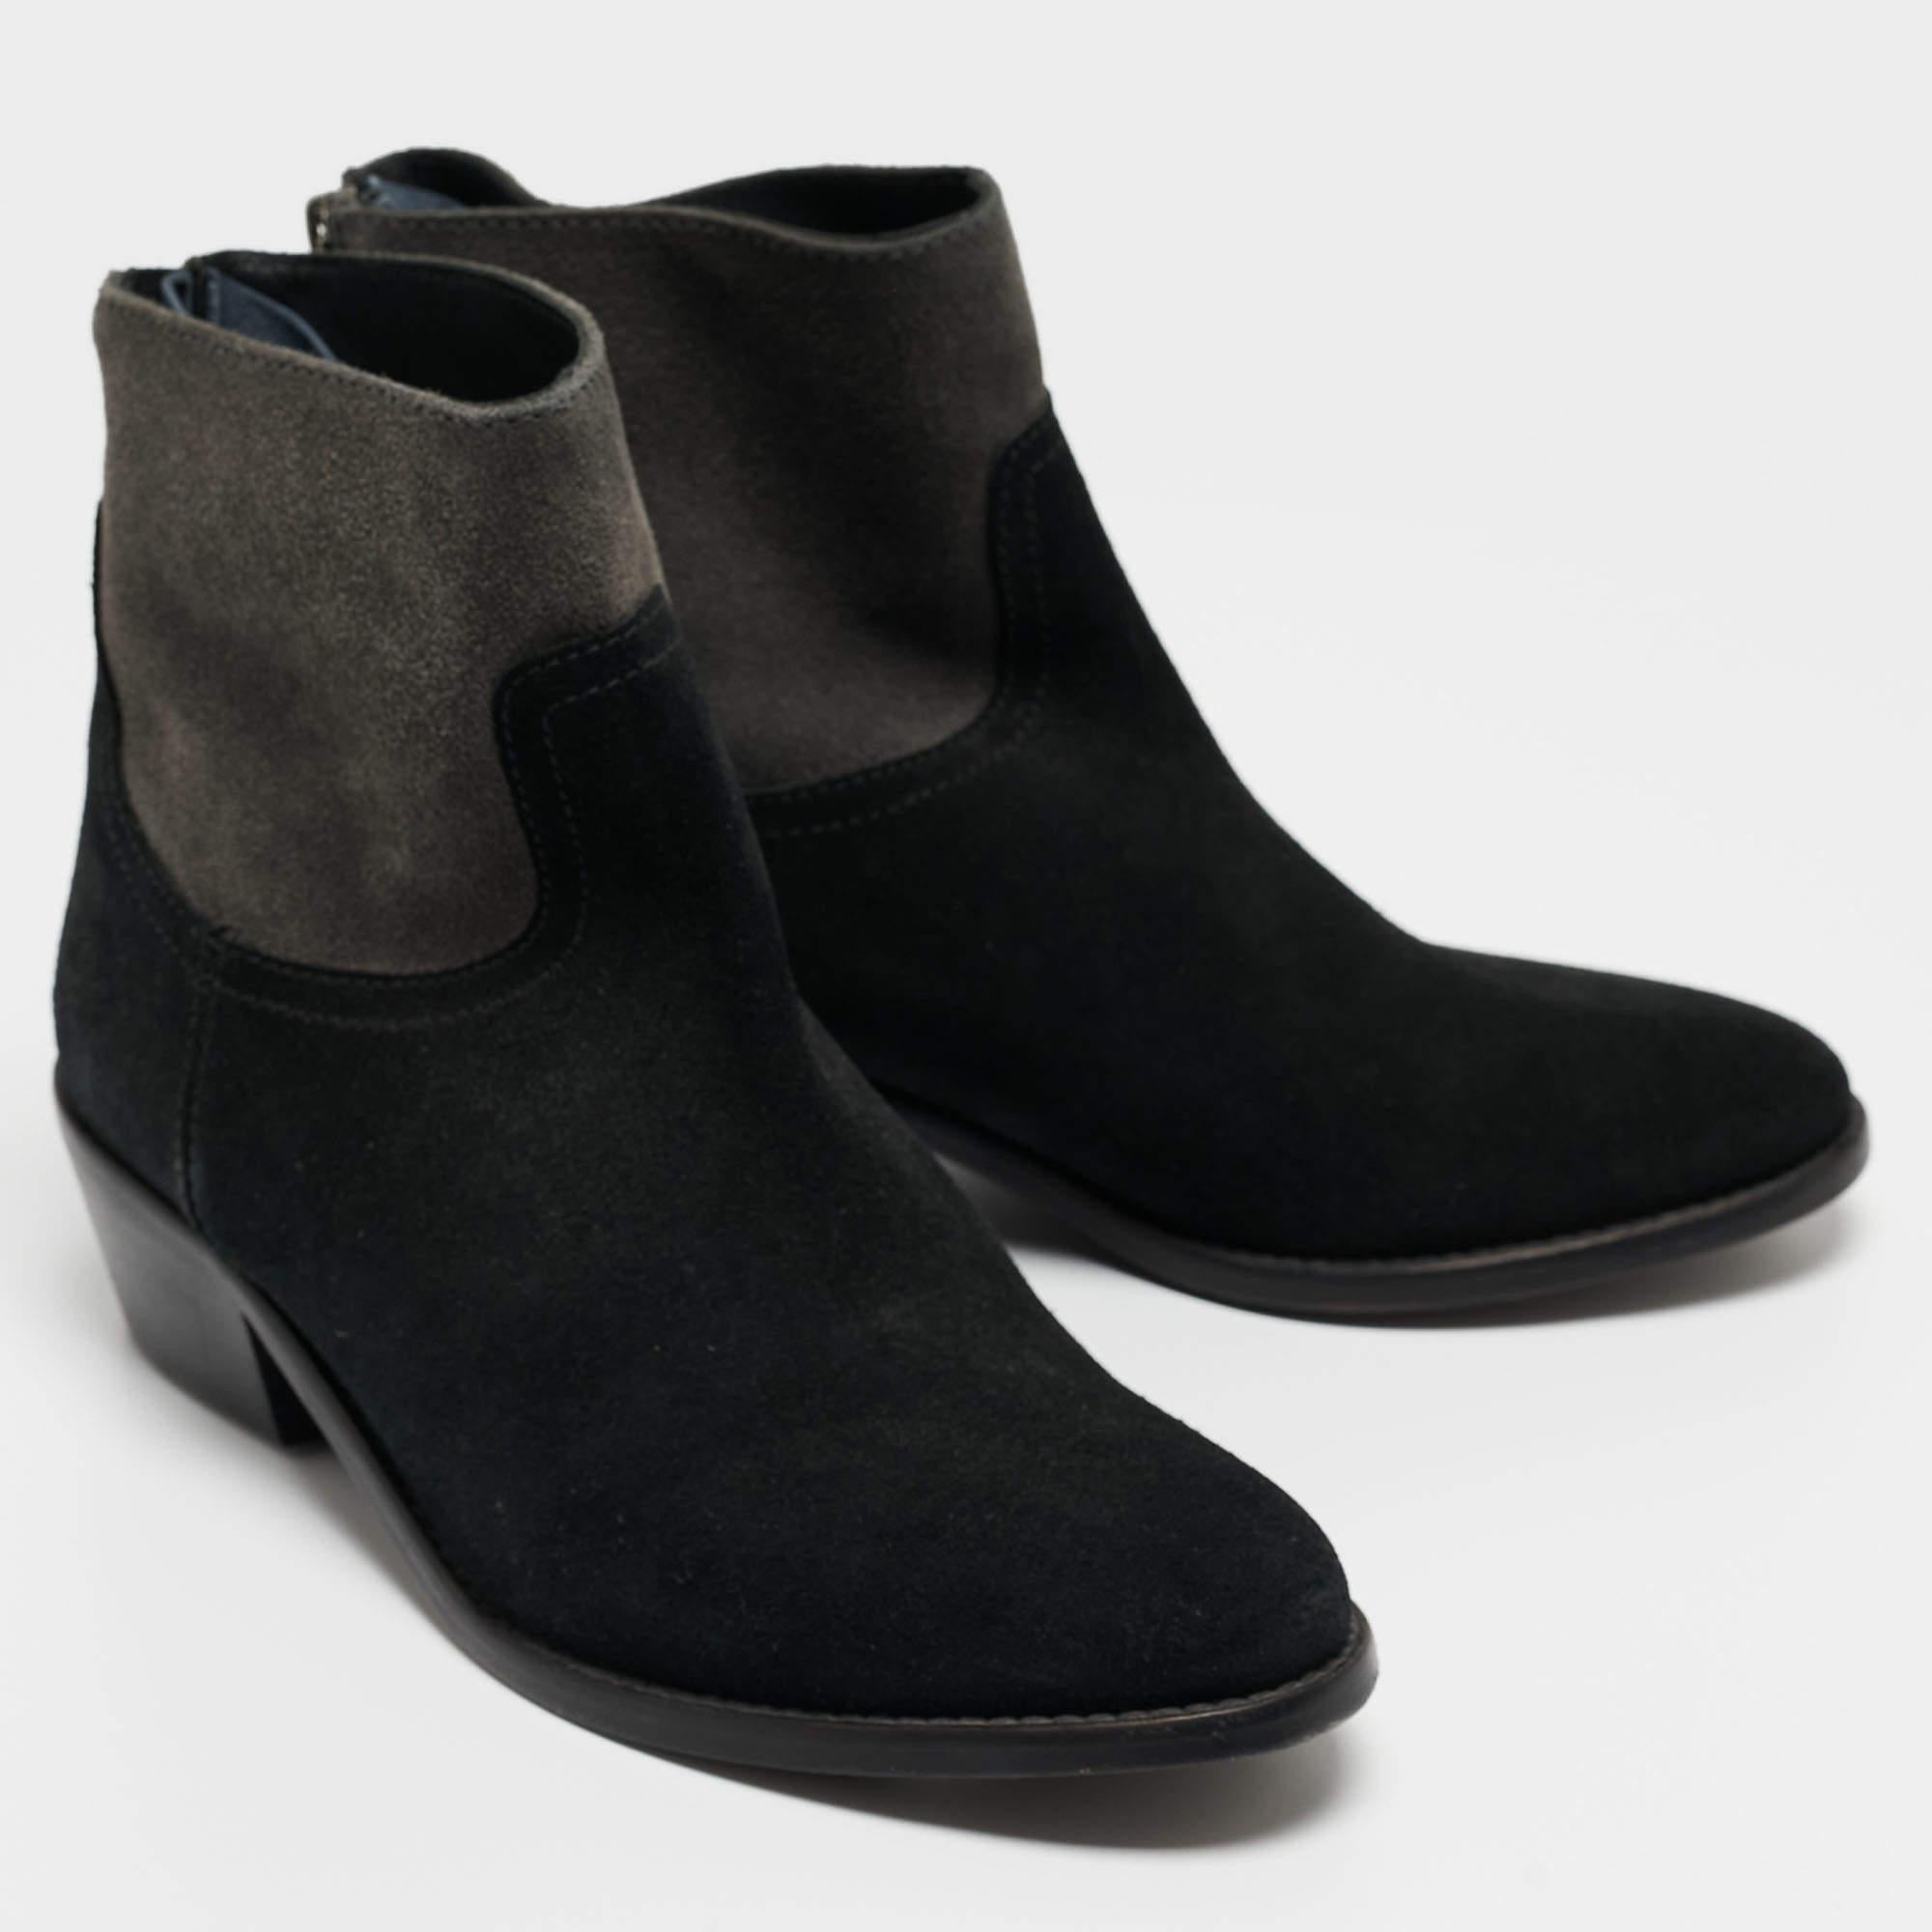 Zadig & Voltaire Black/Grey Suede Teddy Ankle Boots Size 37 In Excellent Condition For Sale In Dubai, Al Qouz 2